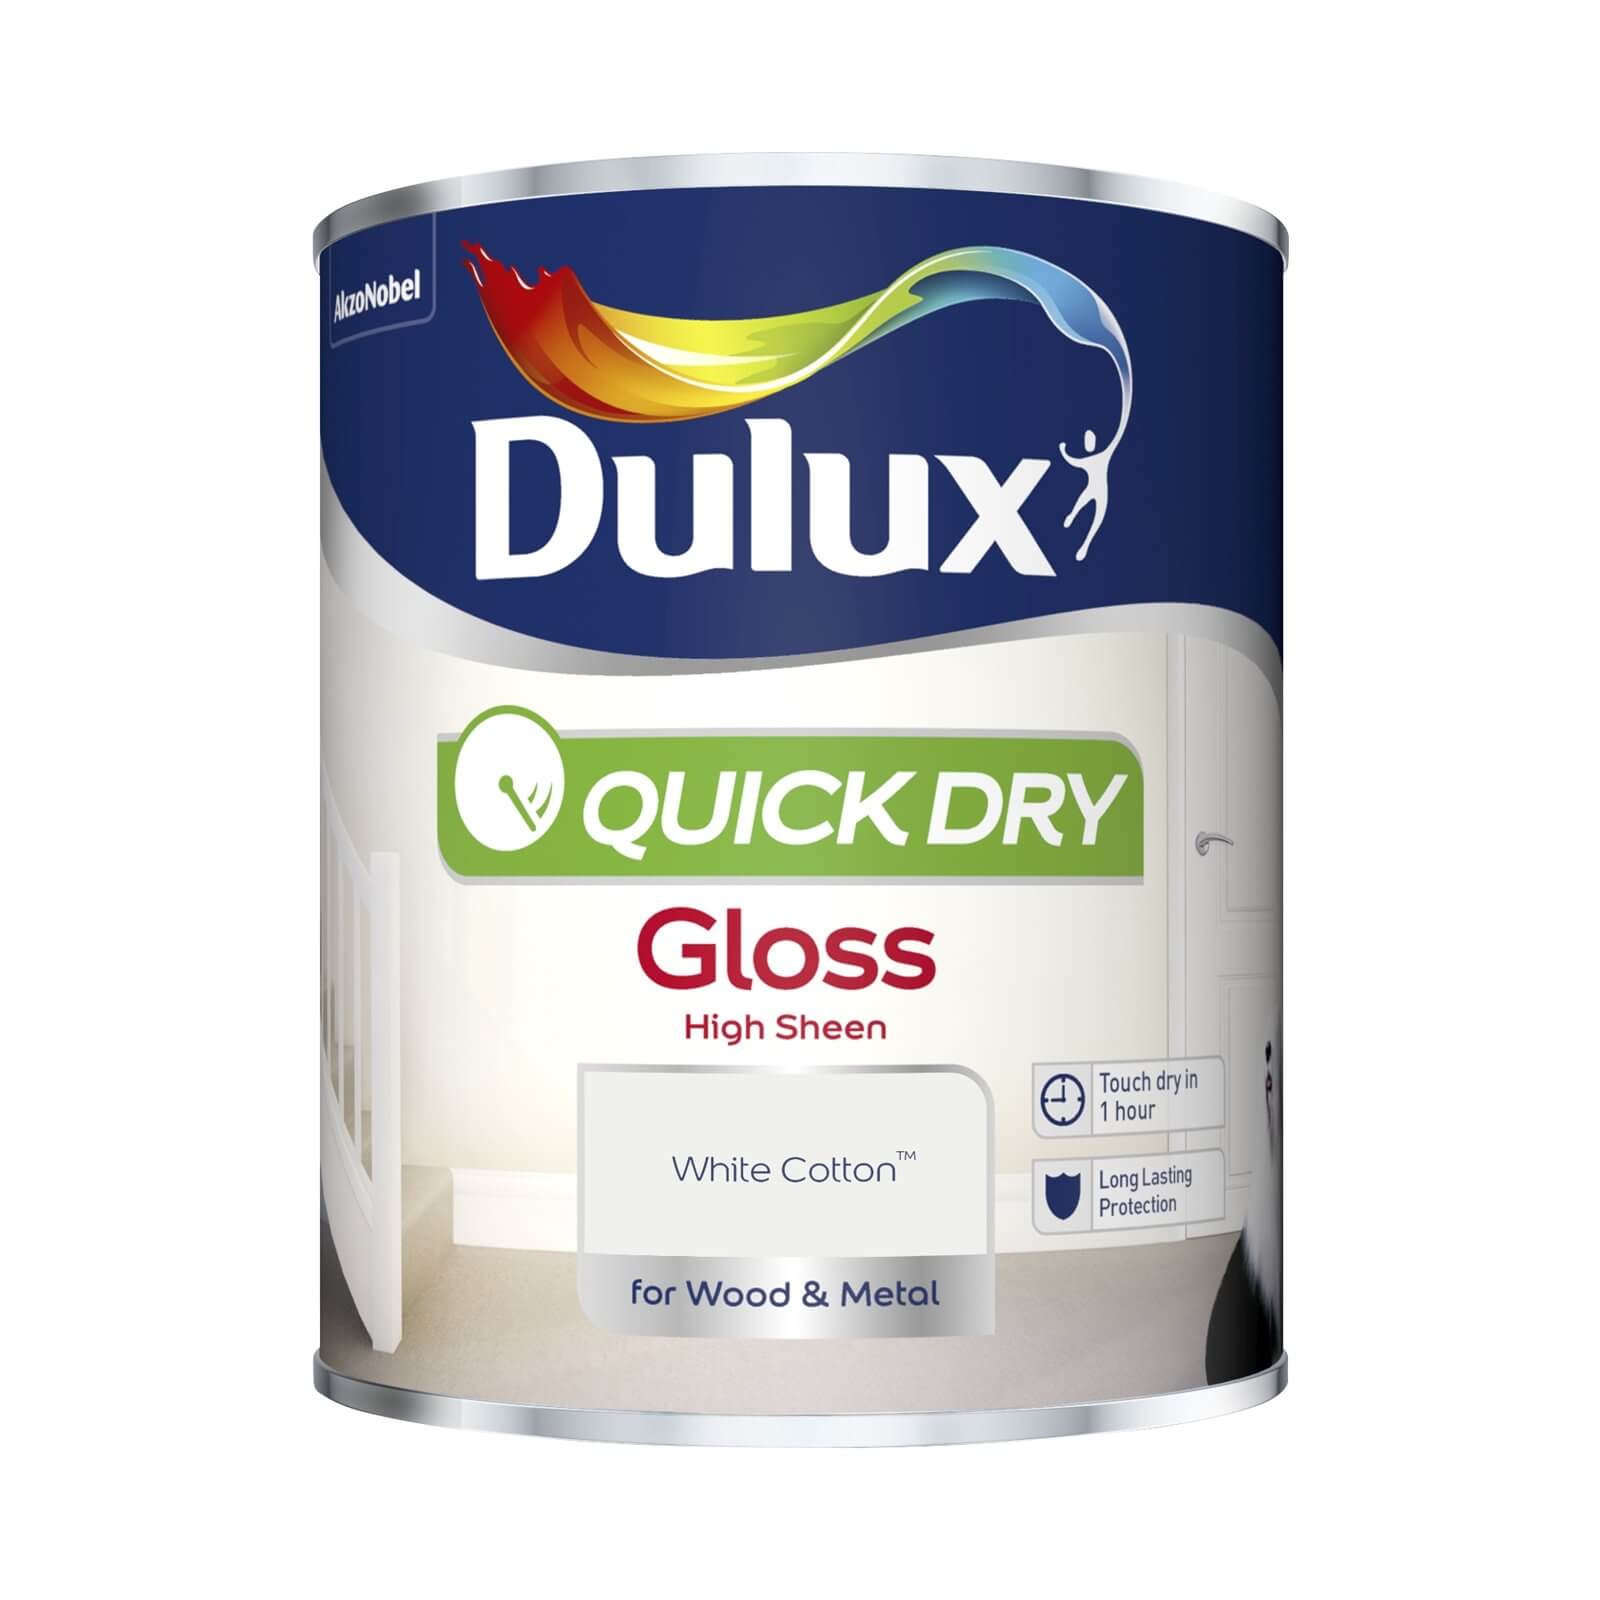 Dulux Quick Dry Gloss Paint White Cotton - 750ml